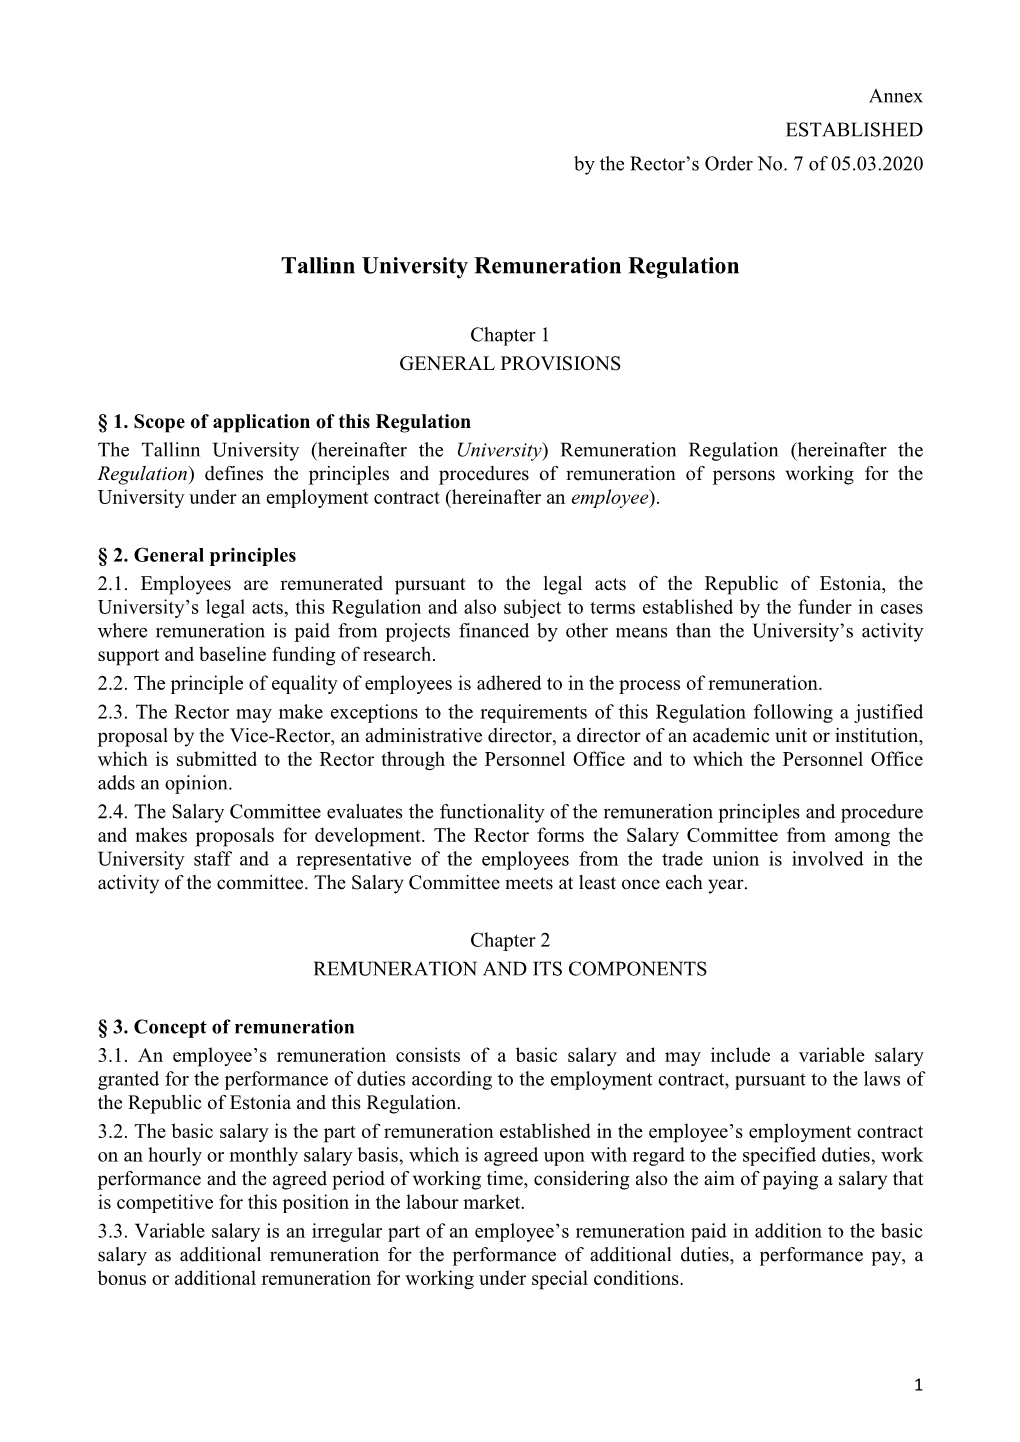 Tallinn University Remuneration Regulation